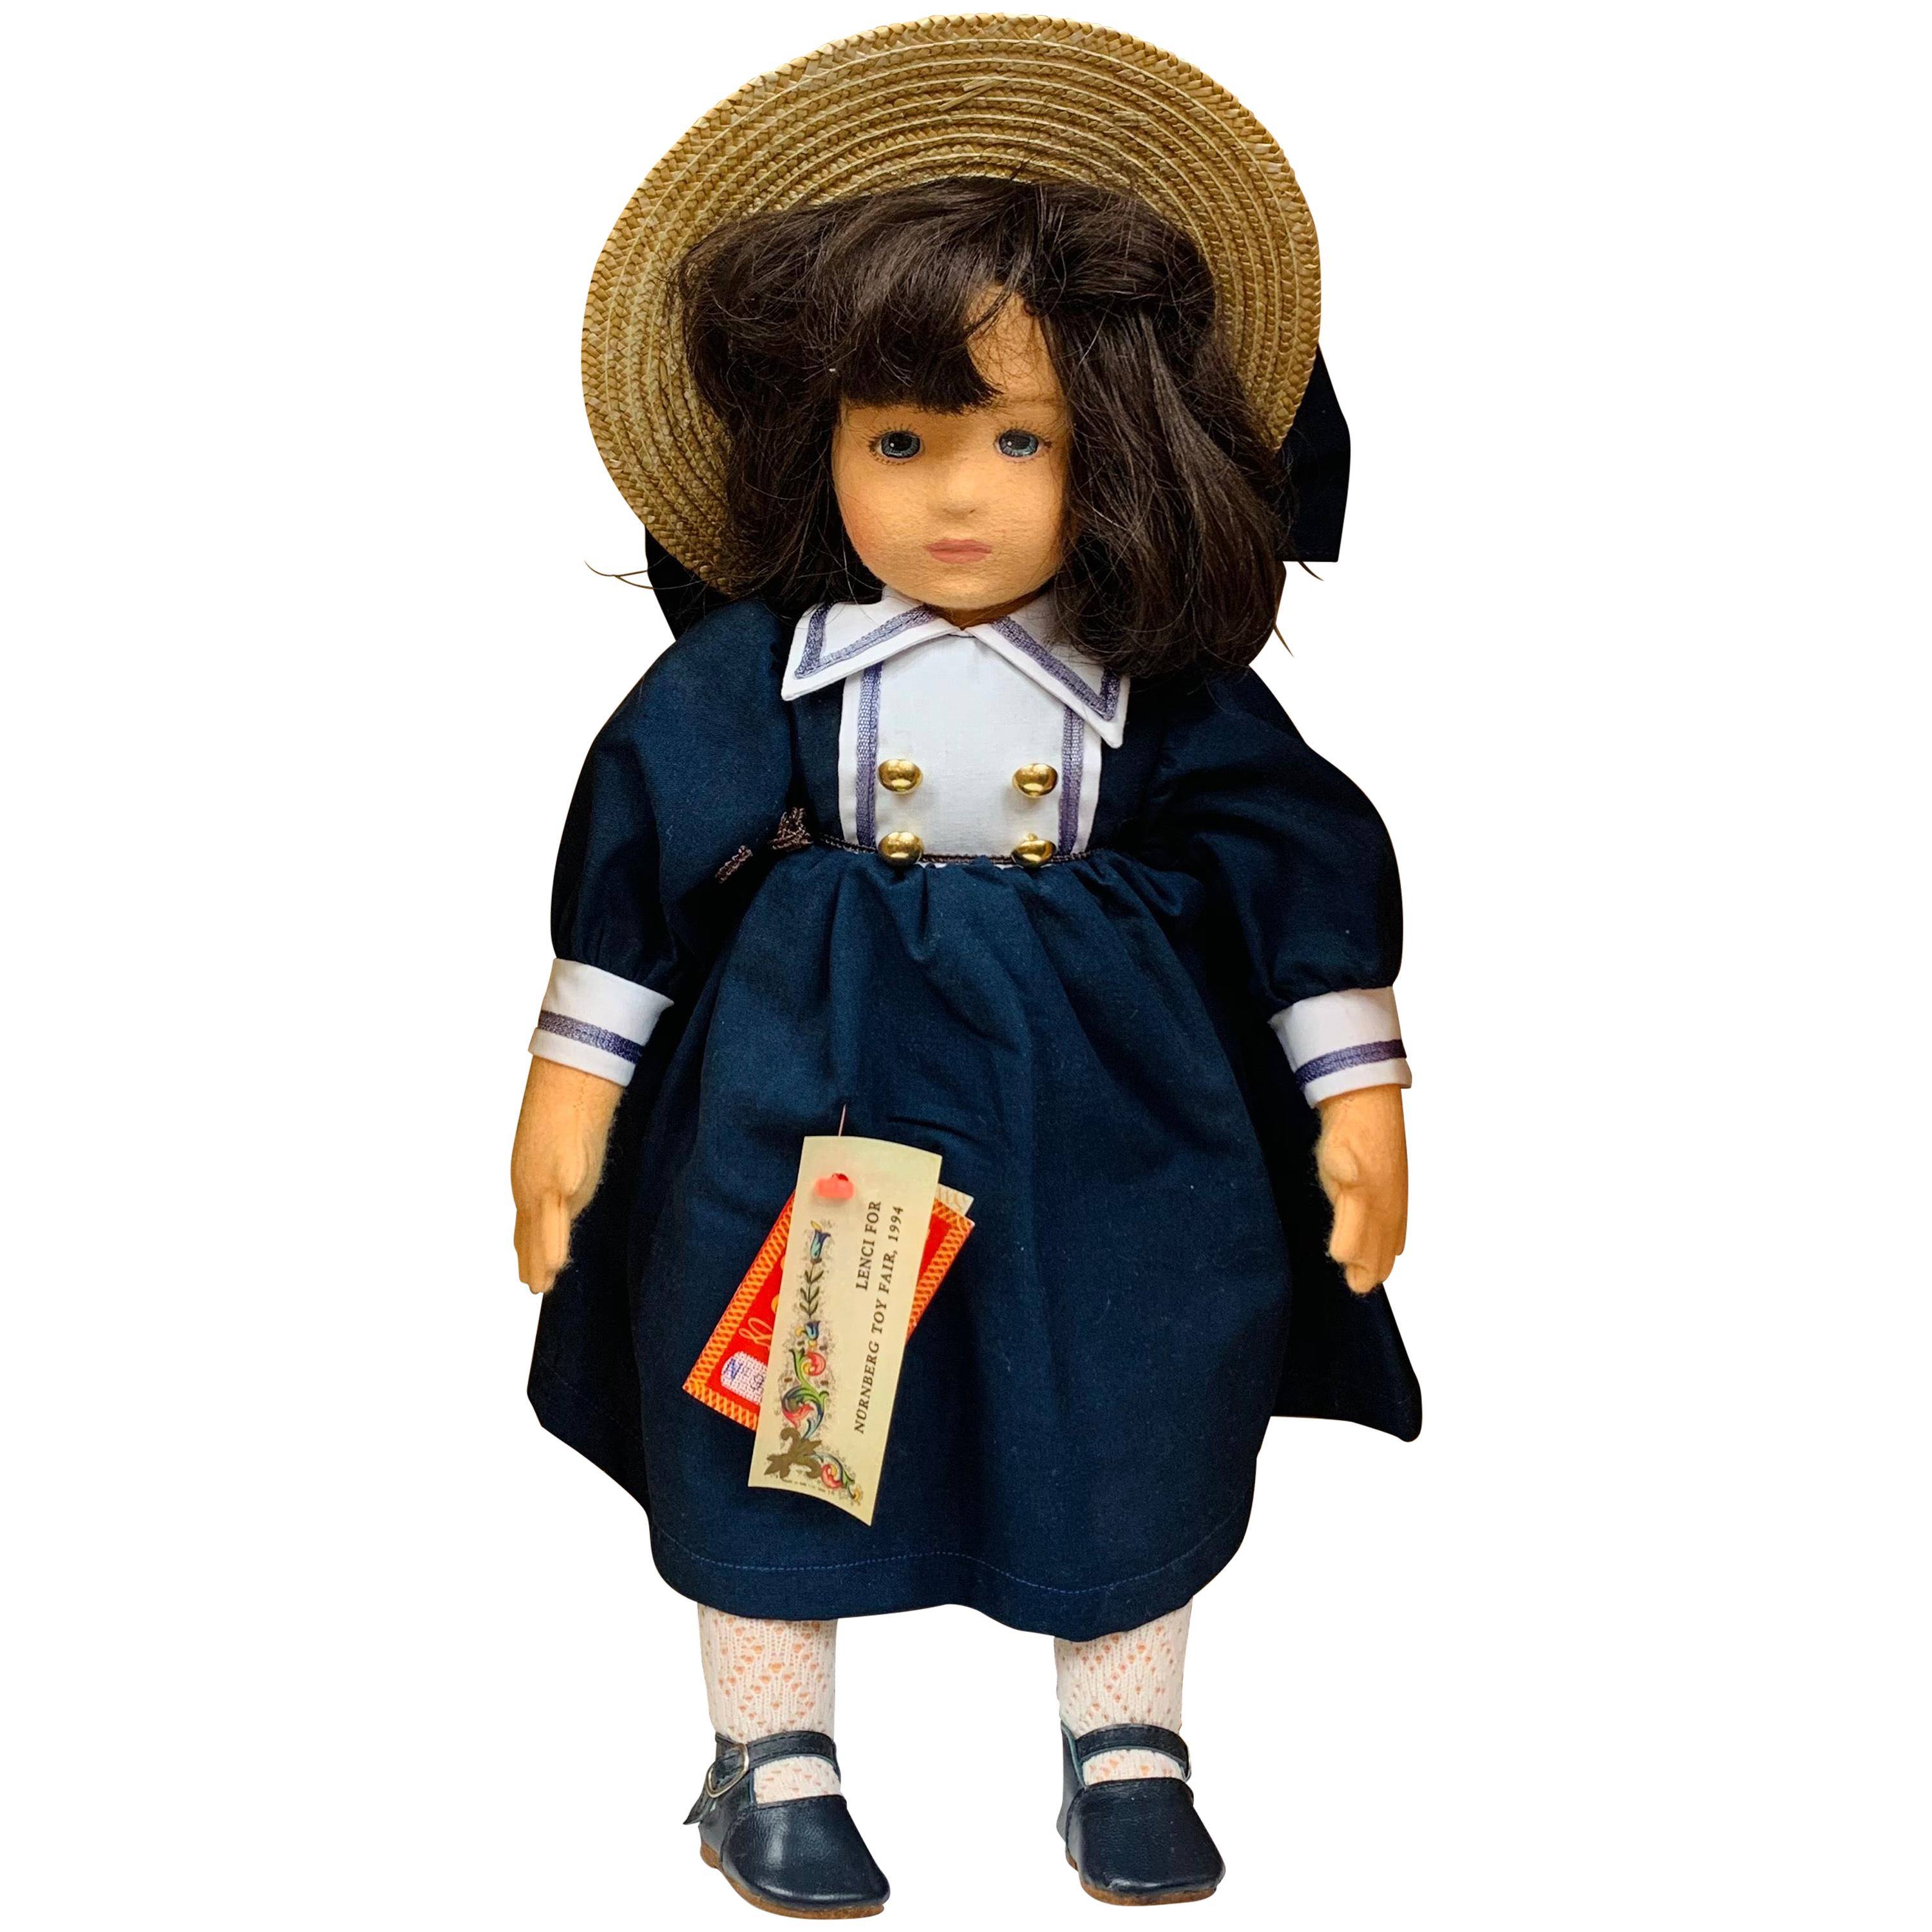 Rare Vintage 1980s Lenci Doll, Serial Number 46 For Sale